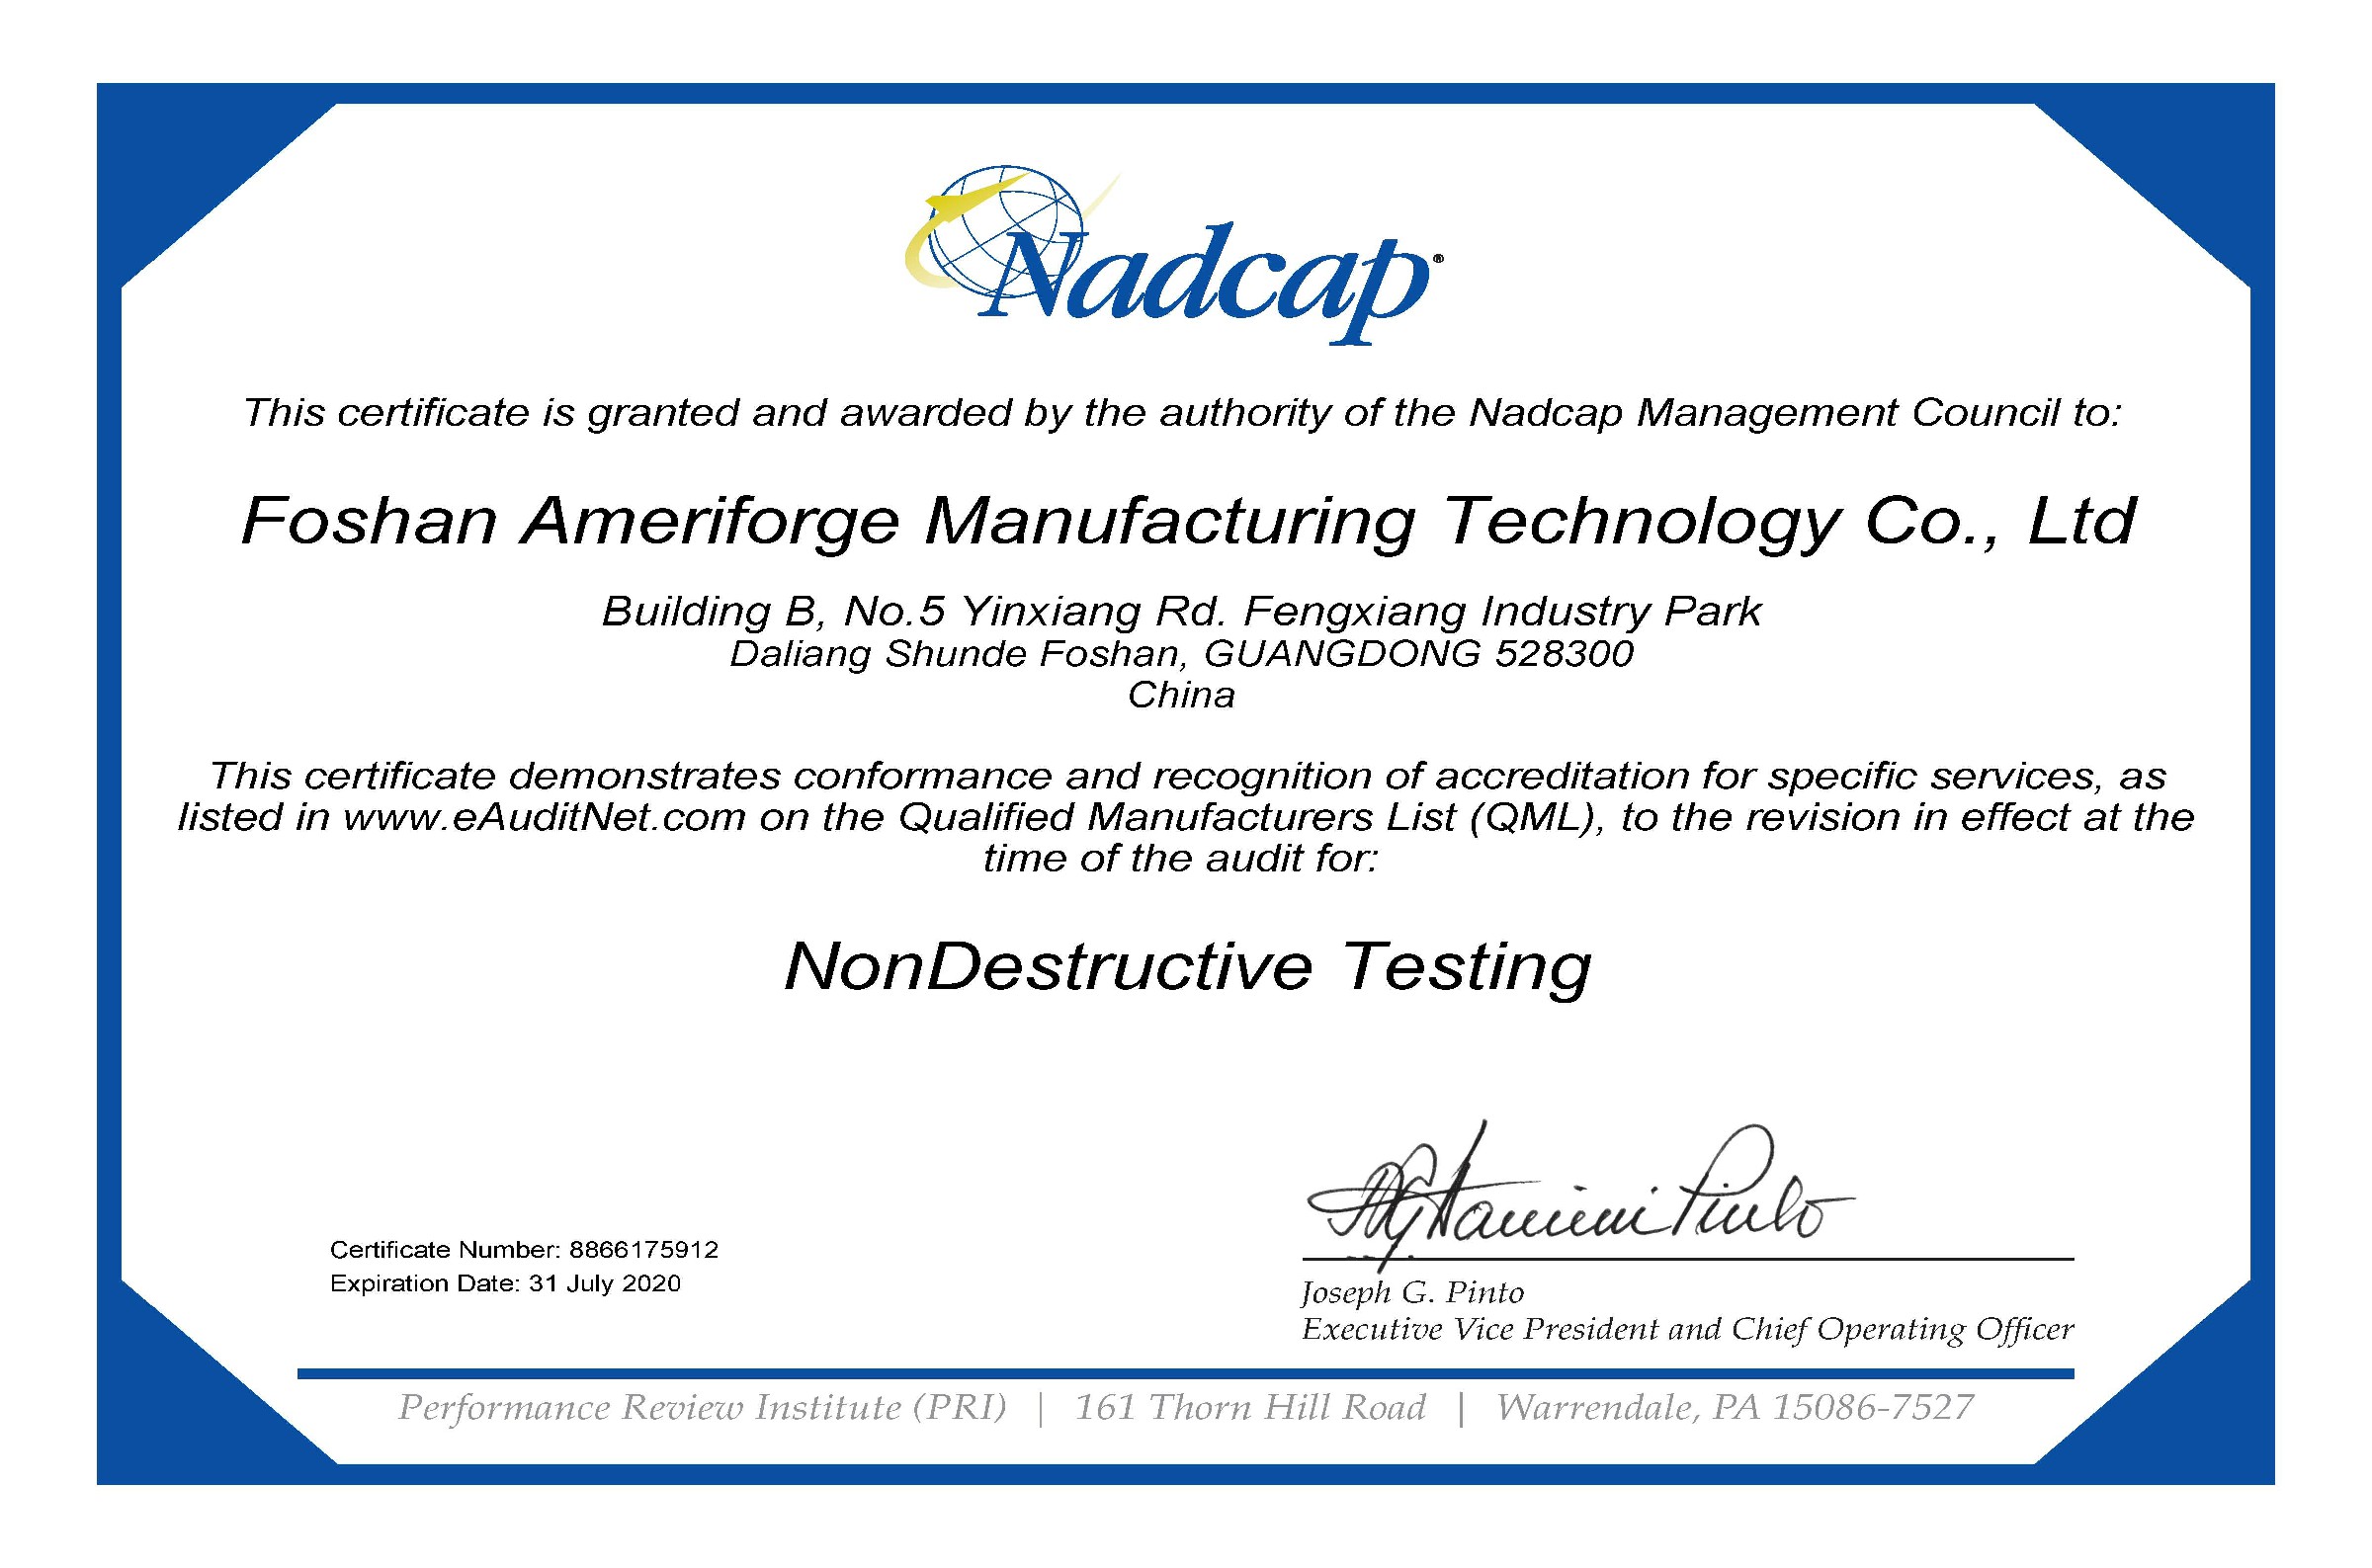 NonDestructive Testing audit